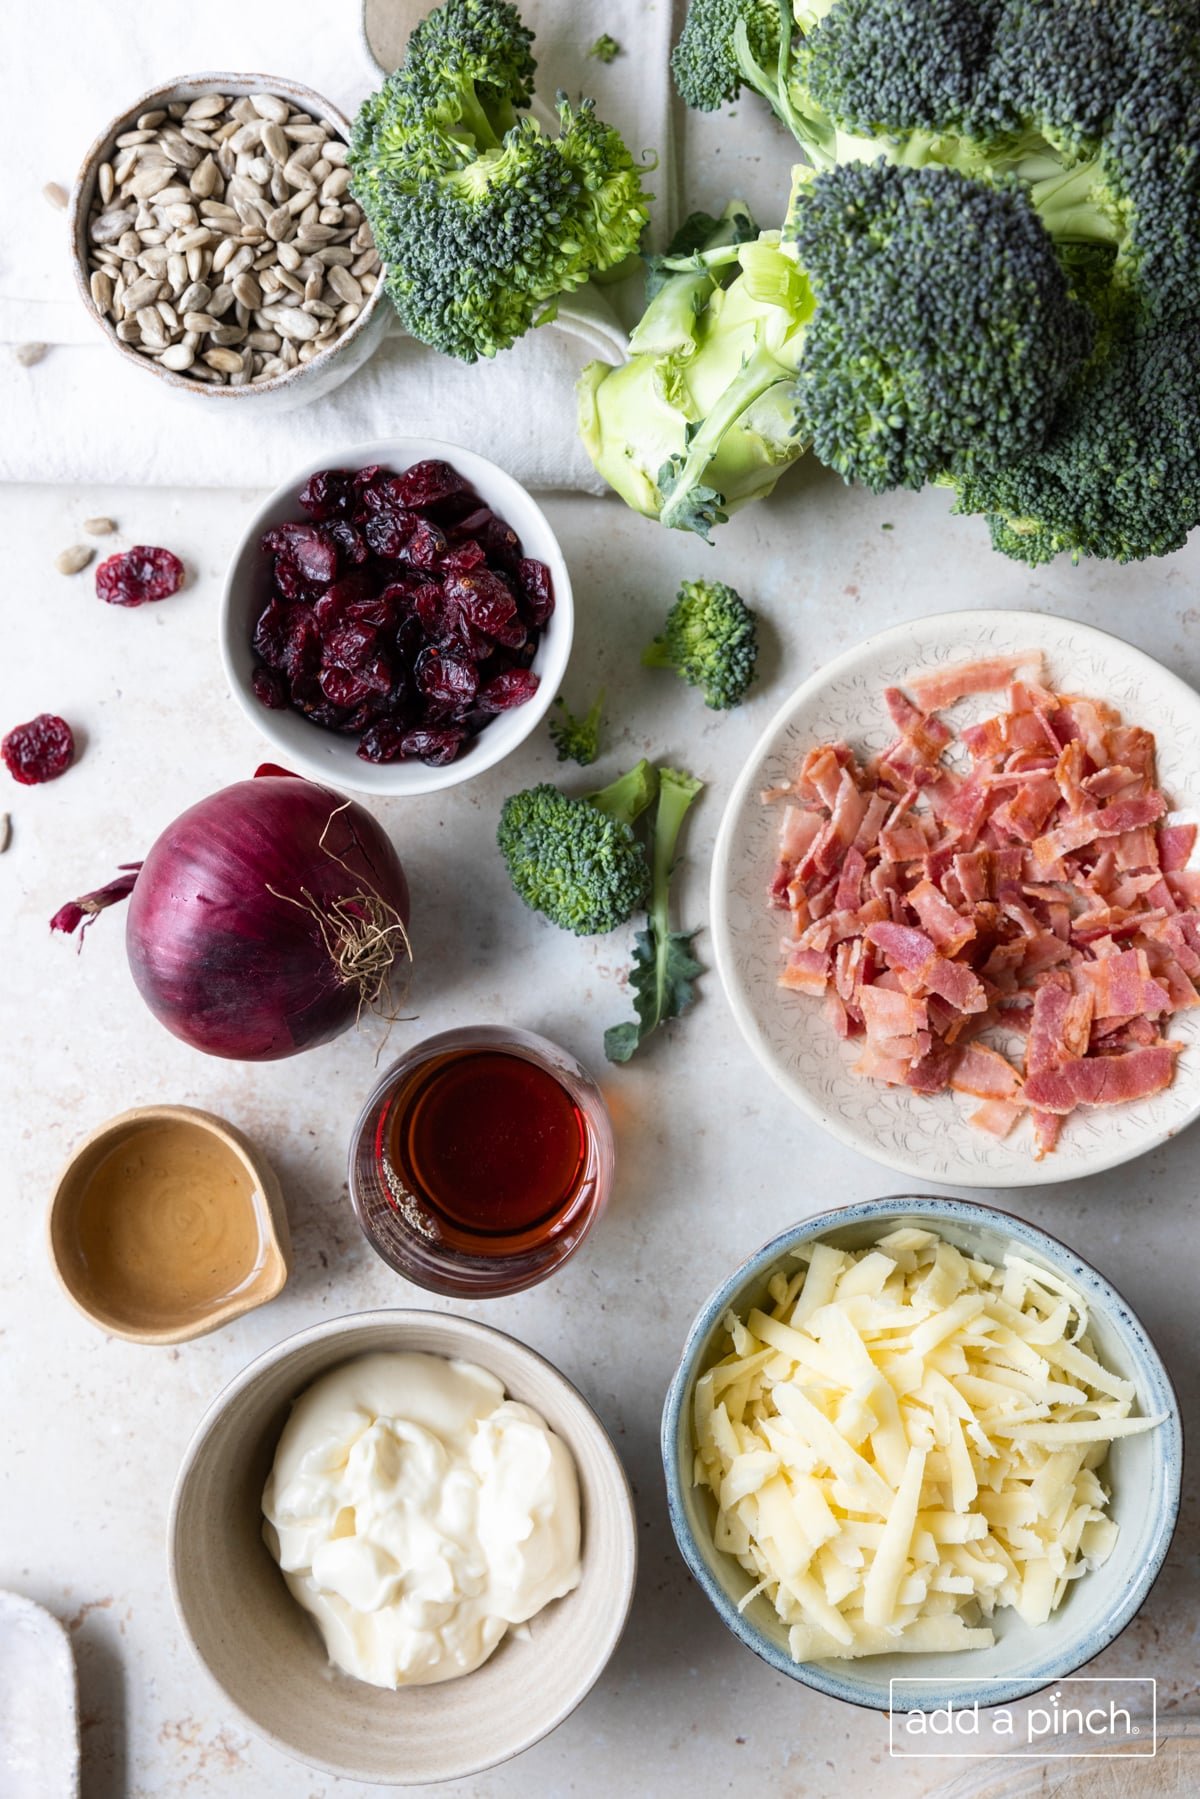 Photo of ingredients used to make broccoli salad.